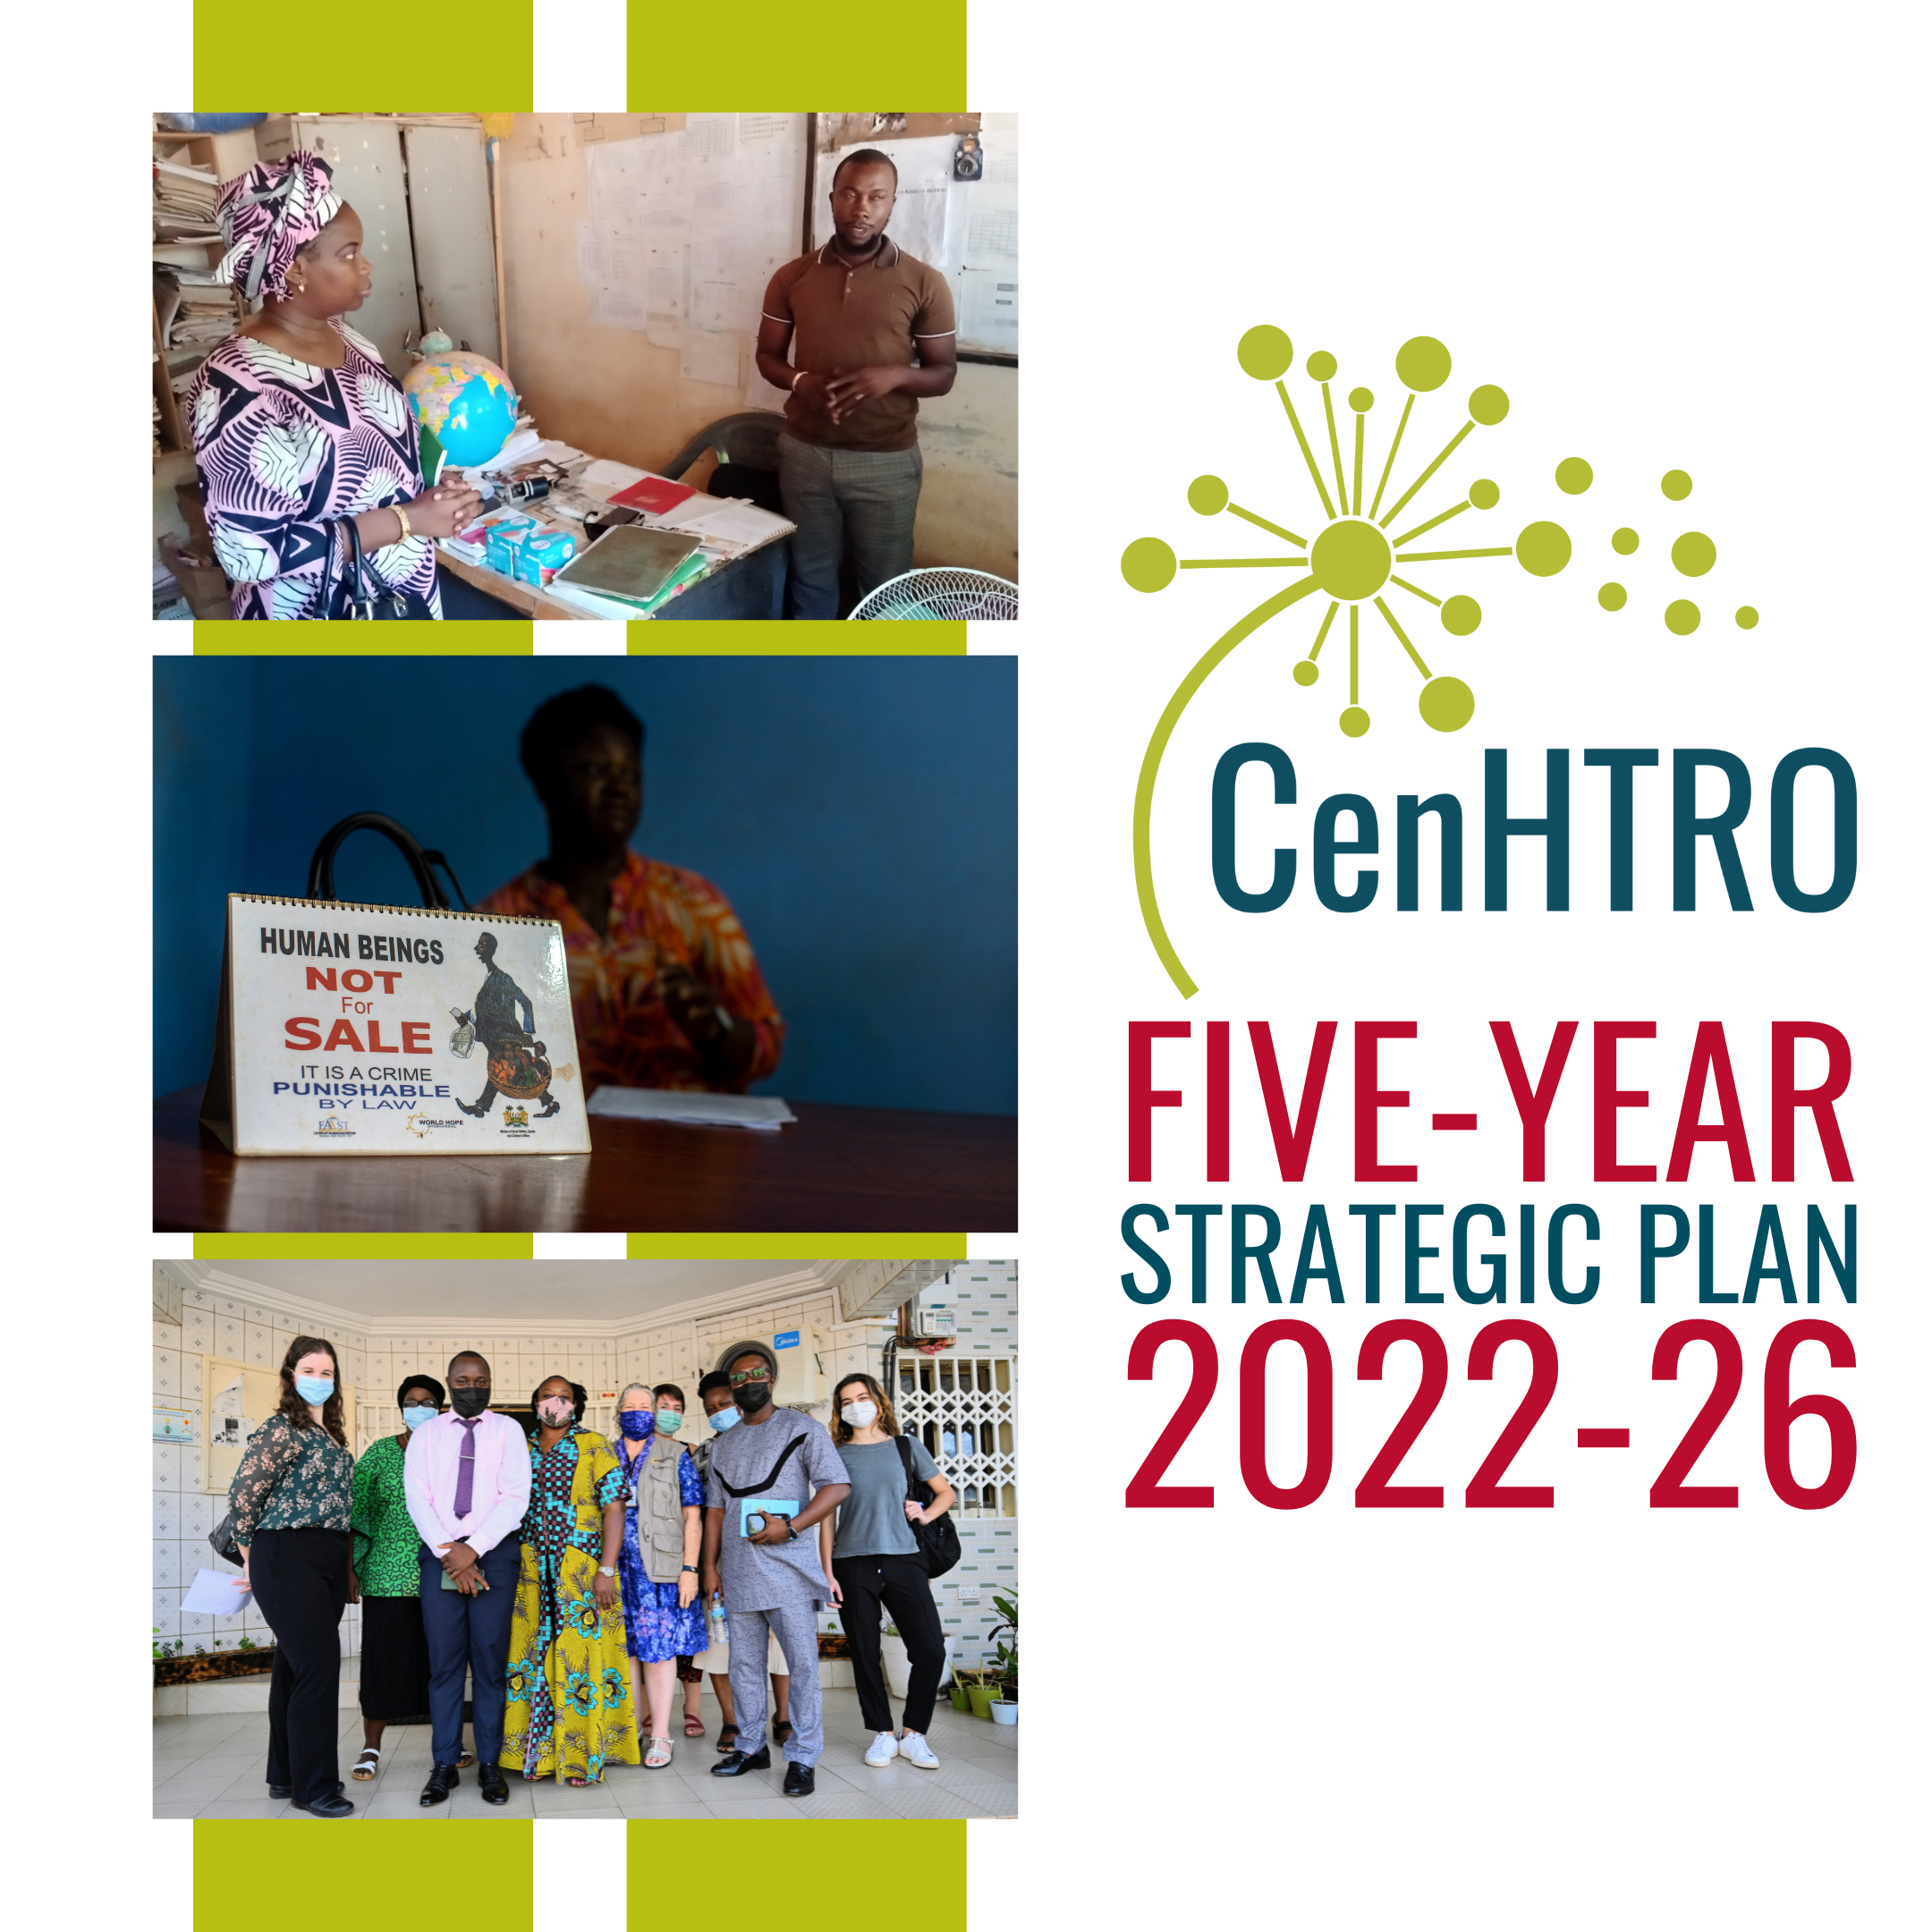 CenHTRO Announces Release of Five-Year Strategic Plan 2022-26